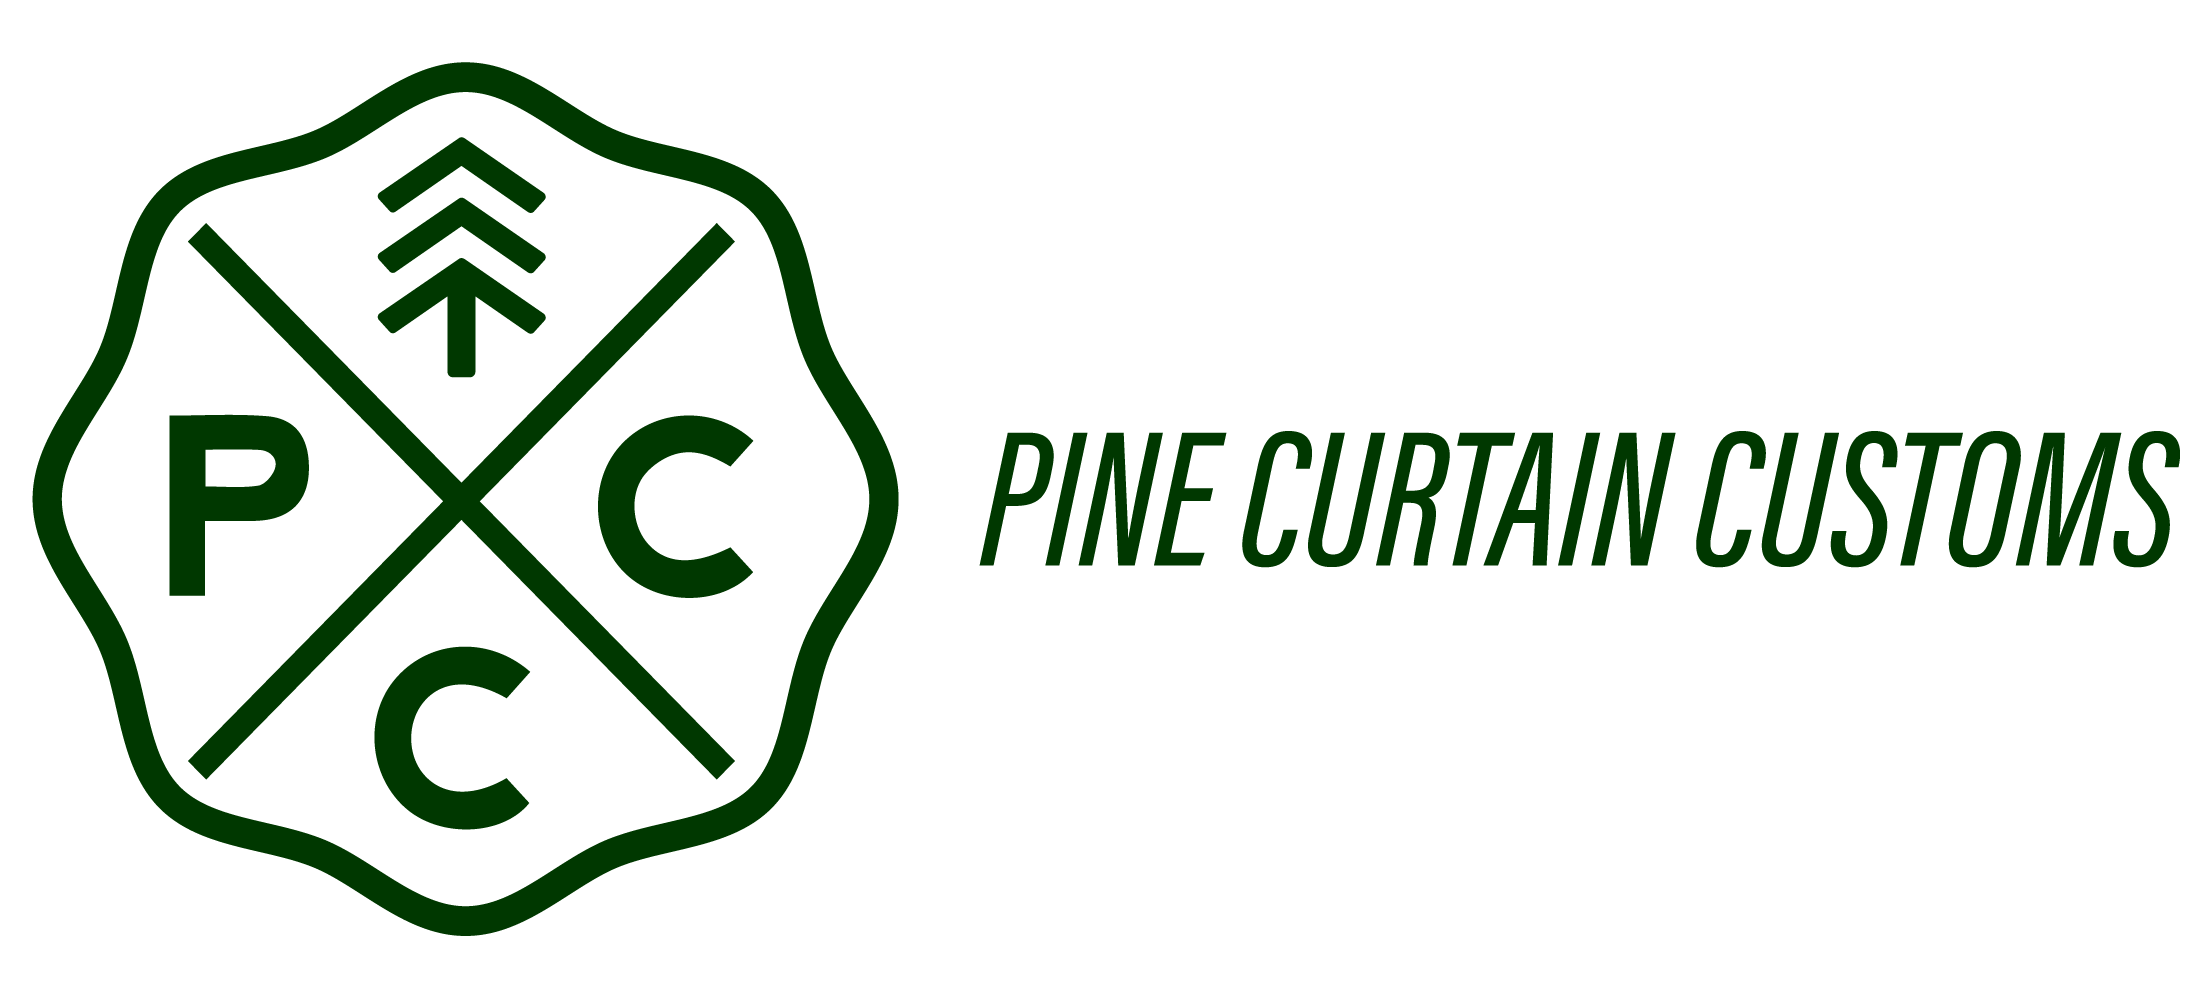 Pine Curtain Customs